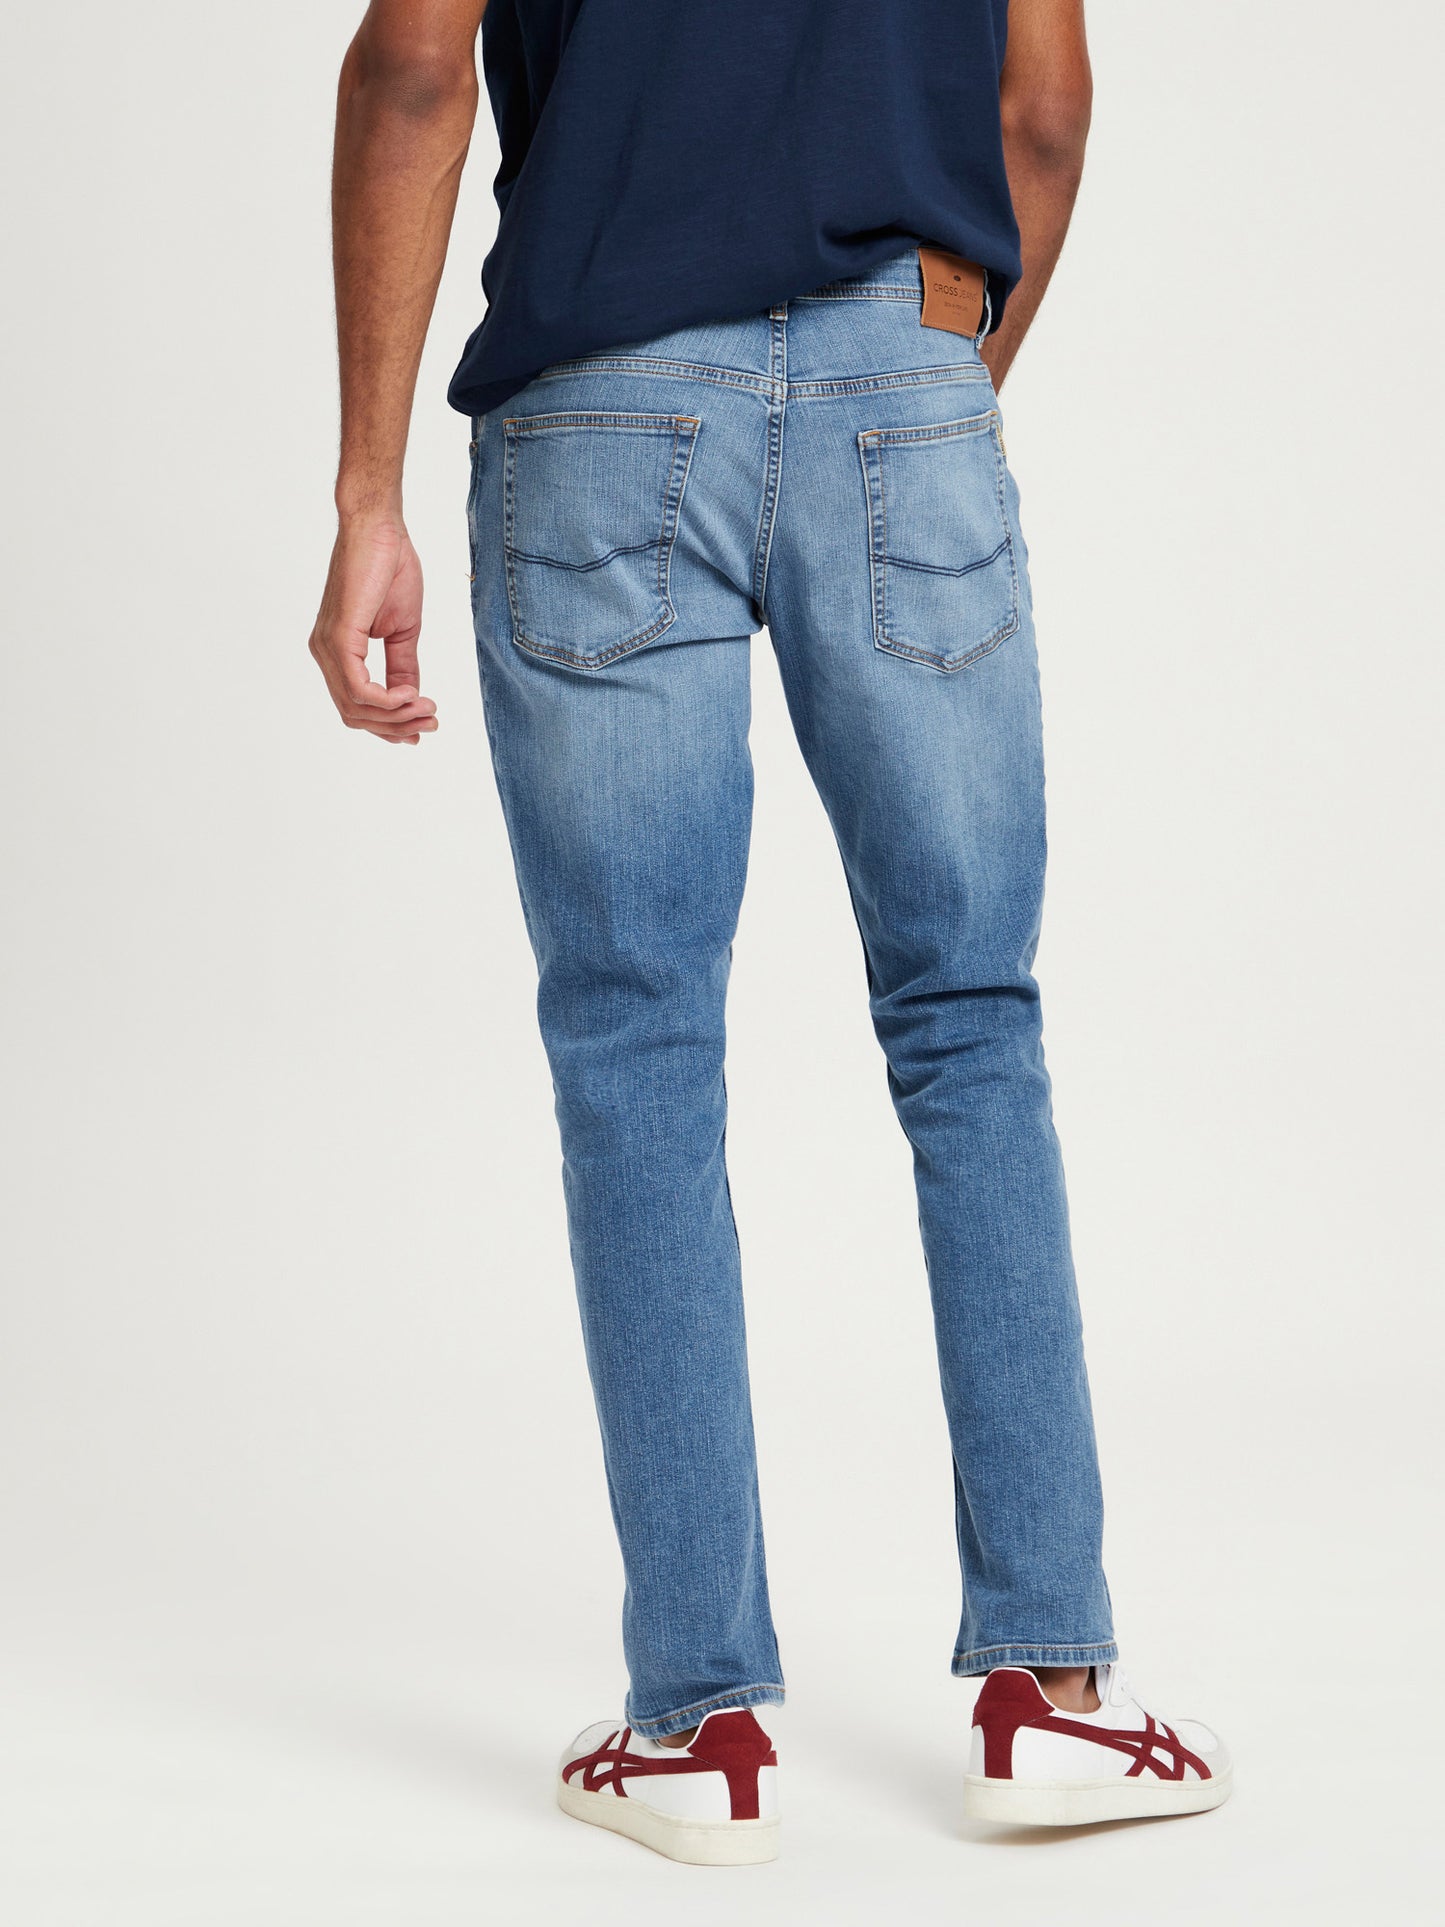 Dylan men's jeans regular fit regular waist straight leg light blue